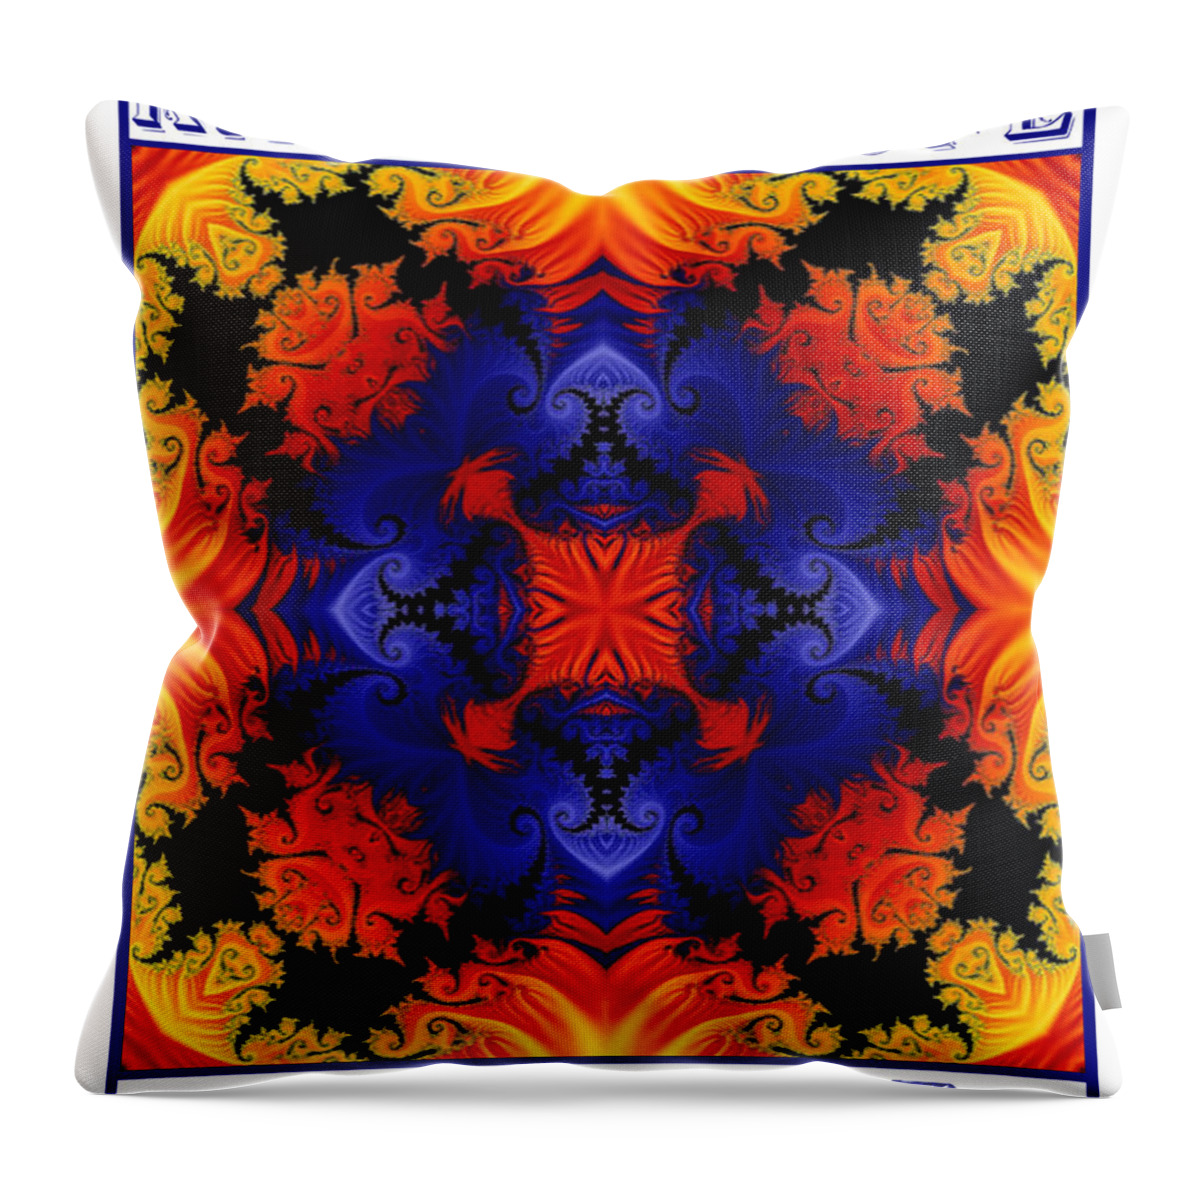 Kaleidoscope Throw Pillow featuring the digital art Kaleidoscope 1 by Charmaine Zoe